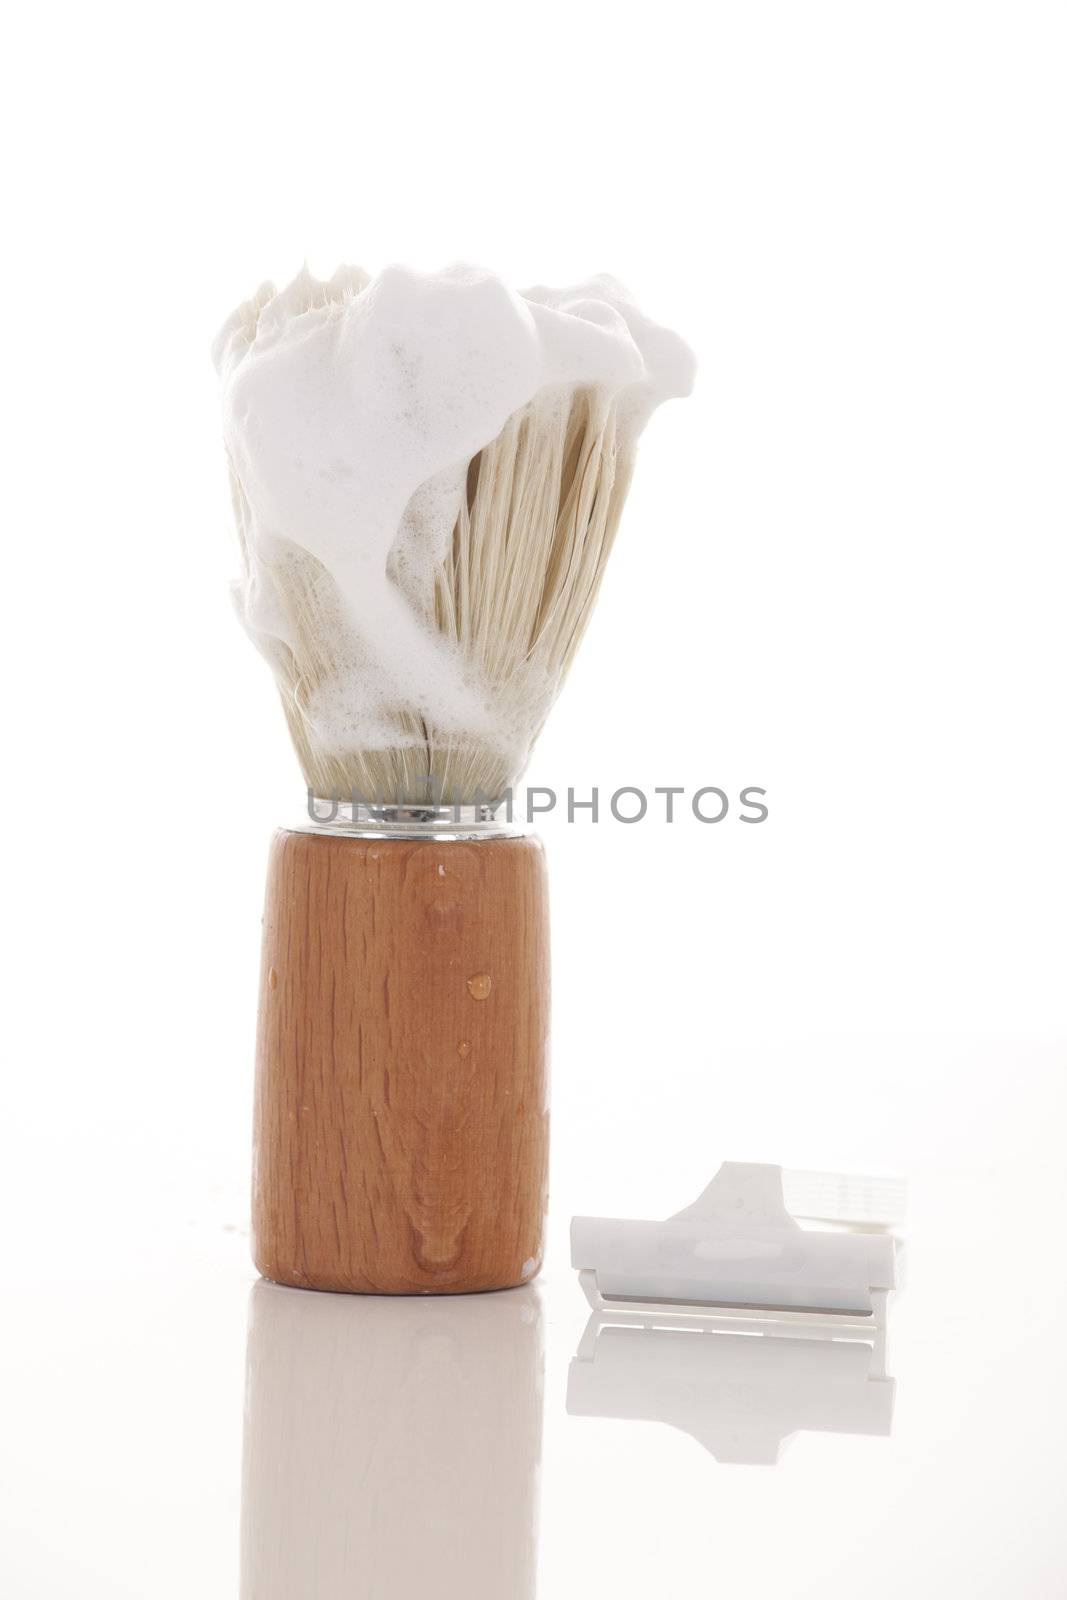 Retro badger shaving brush with a dollop of shaving cream.